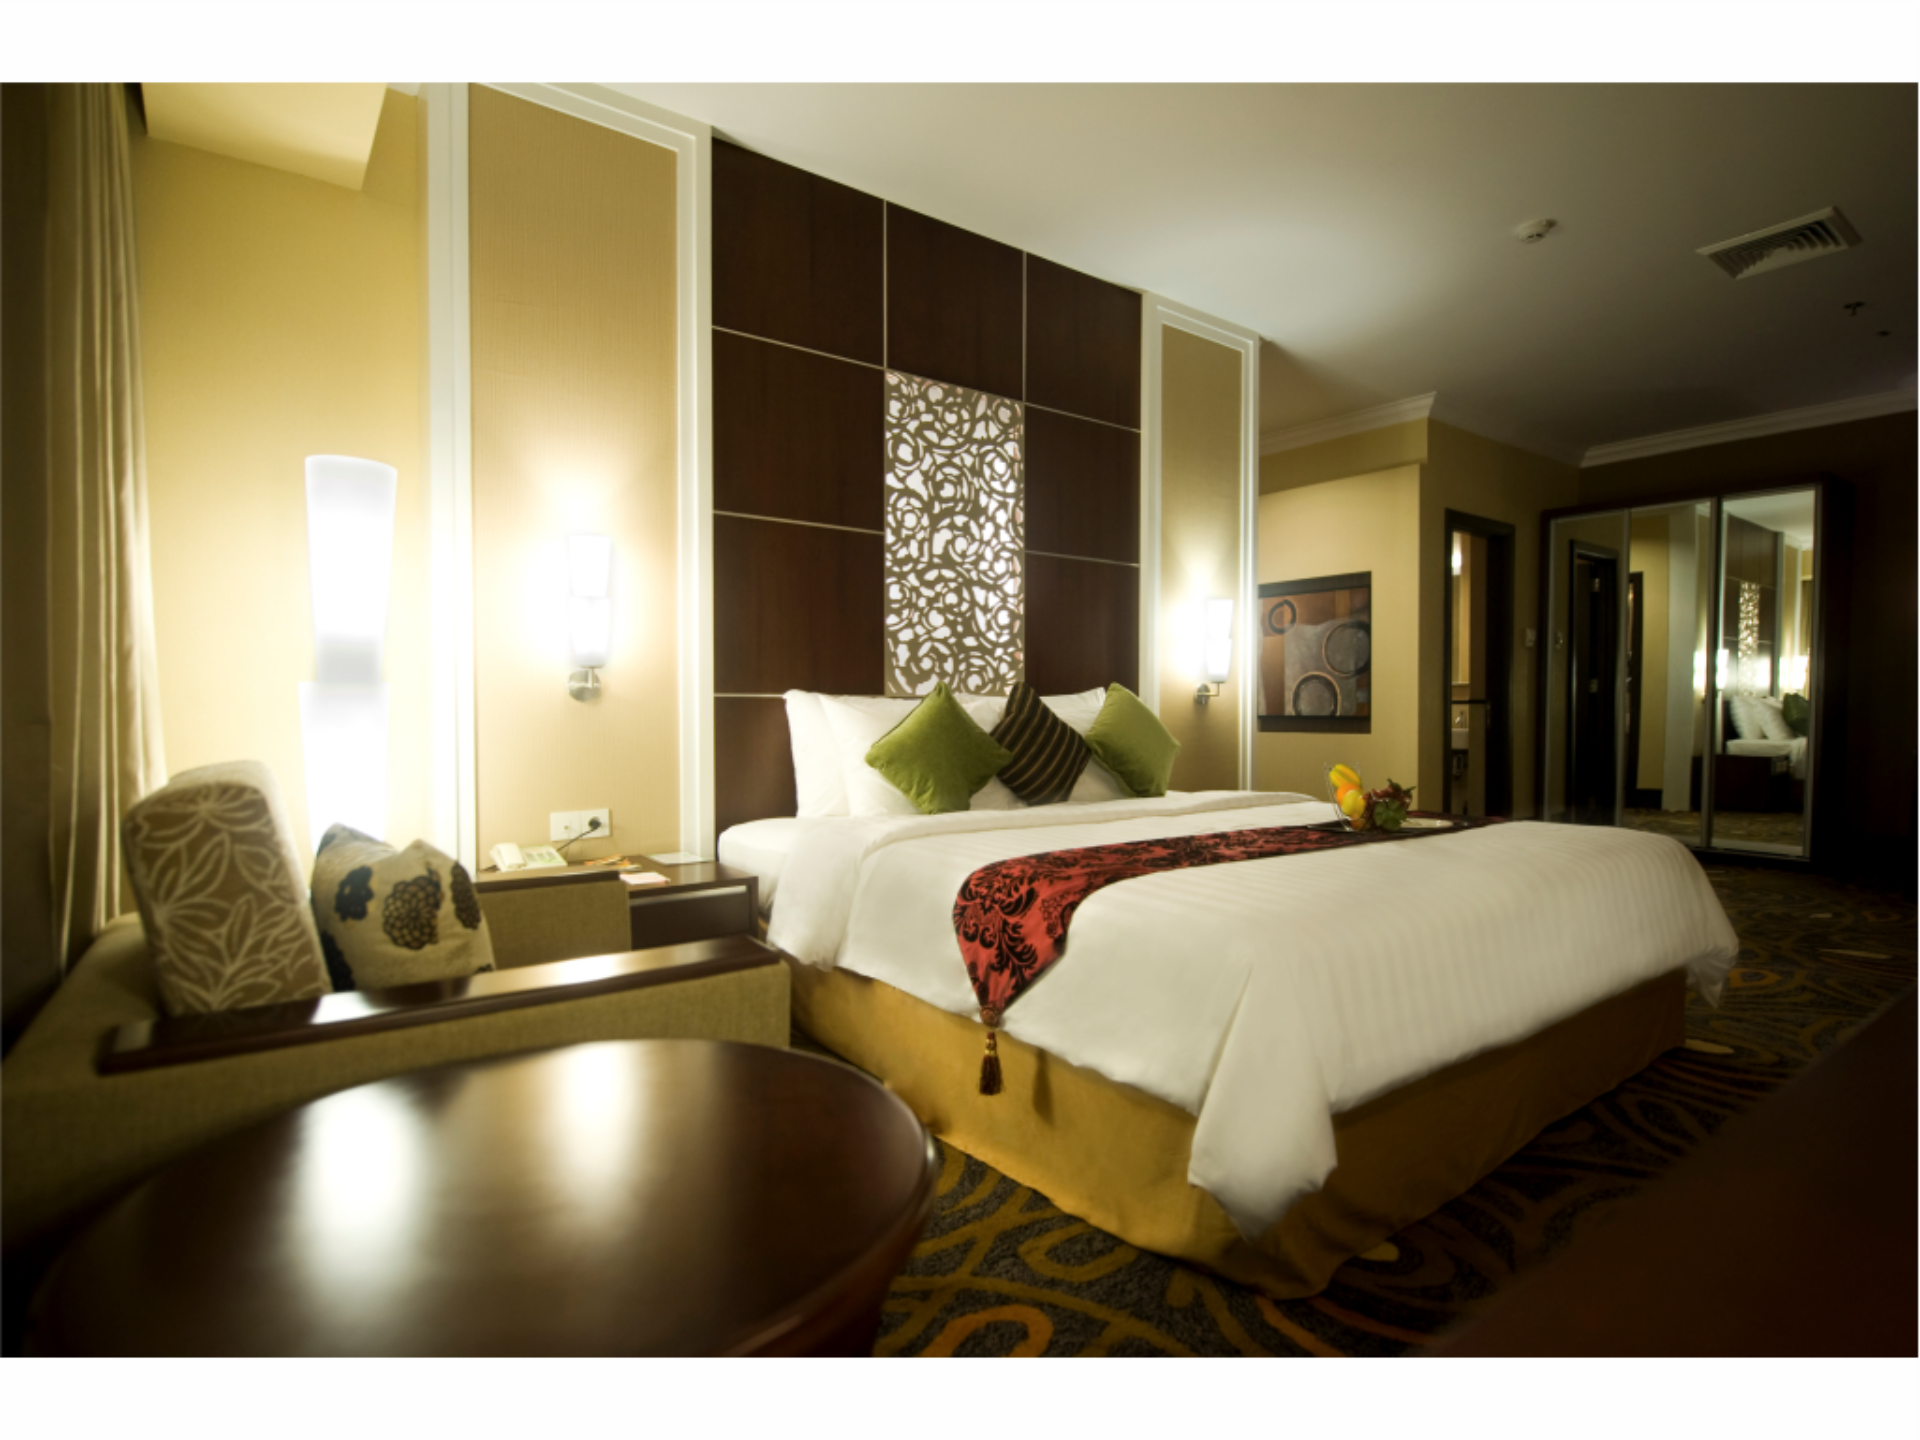 Emerald Garden Hotel Medan Rondreis Indonesia Vakantie Original Asia